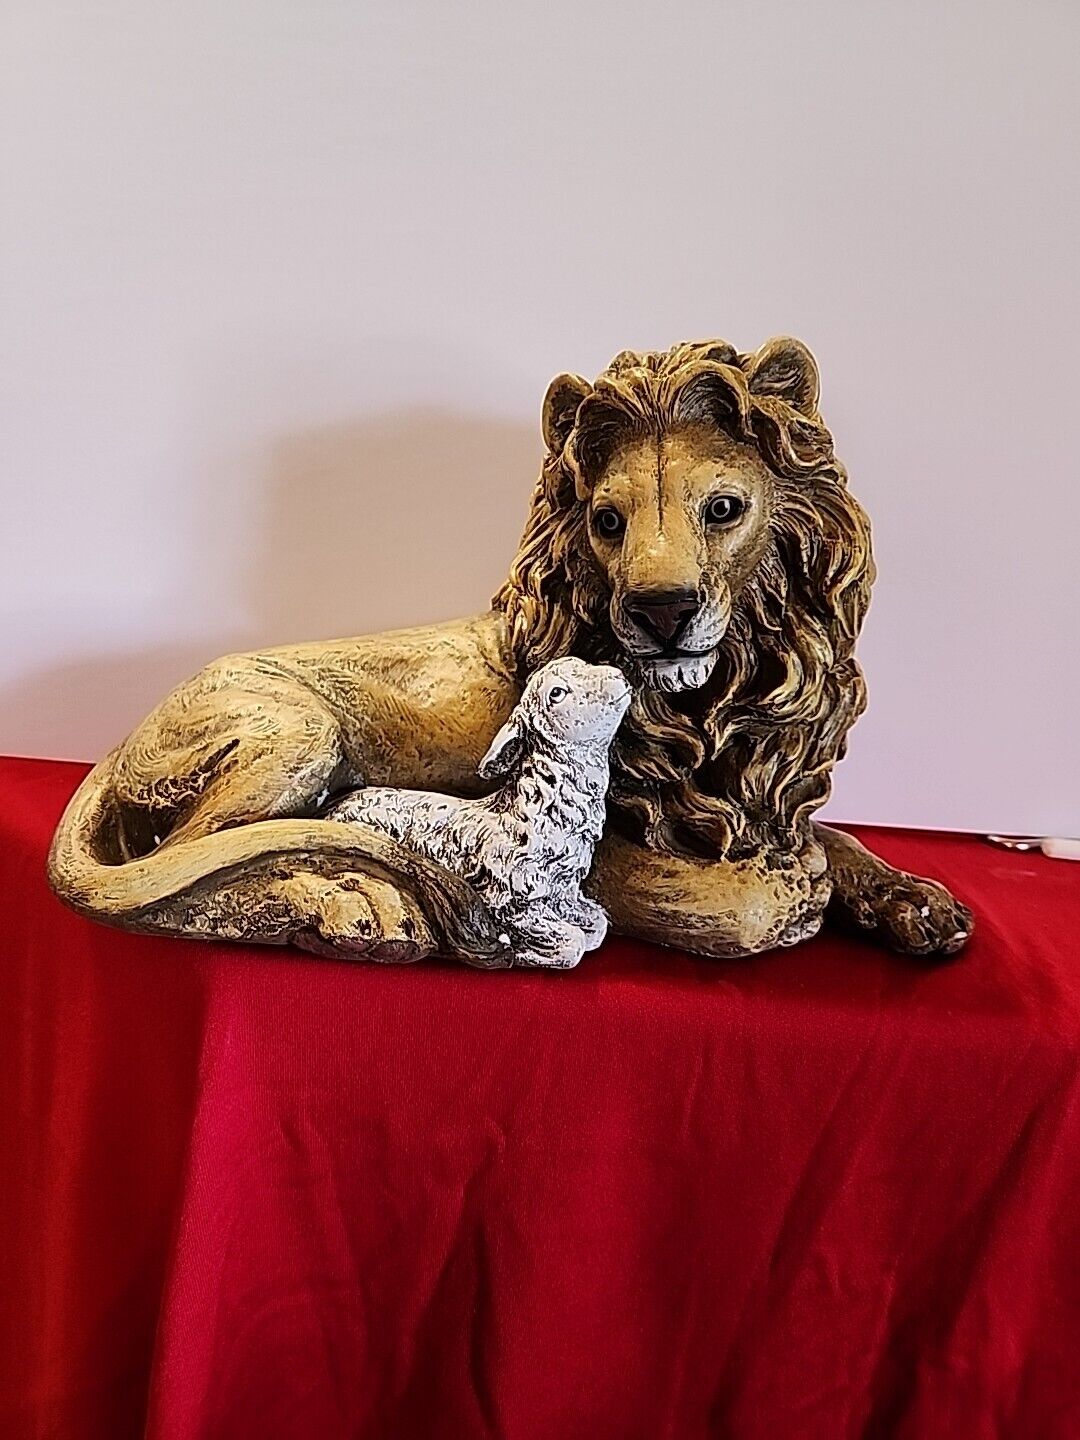 Joseph Studio Lion and Lamb Laying Together Religious Christmas Figurine